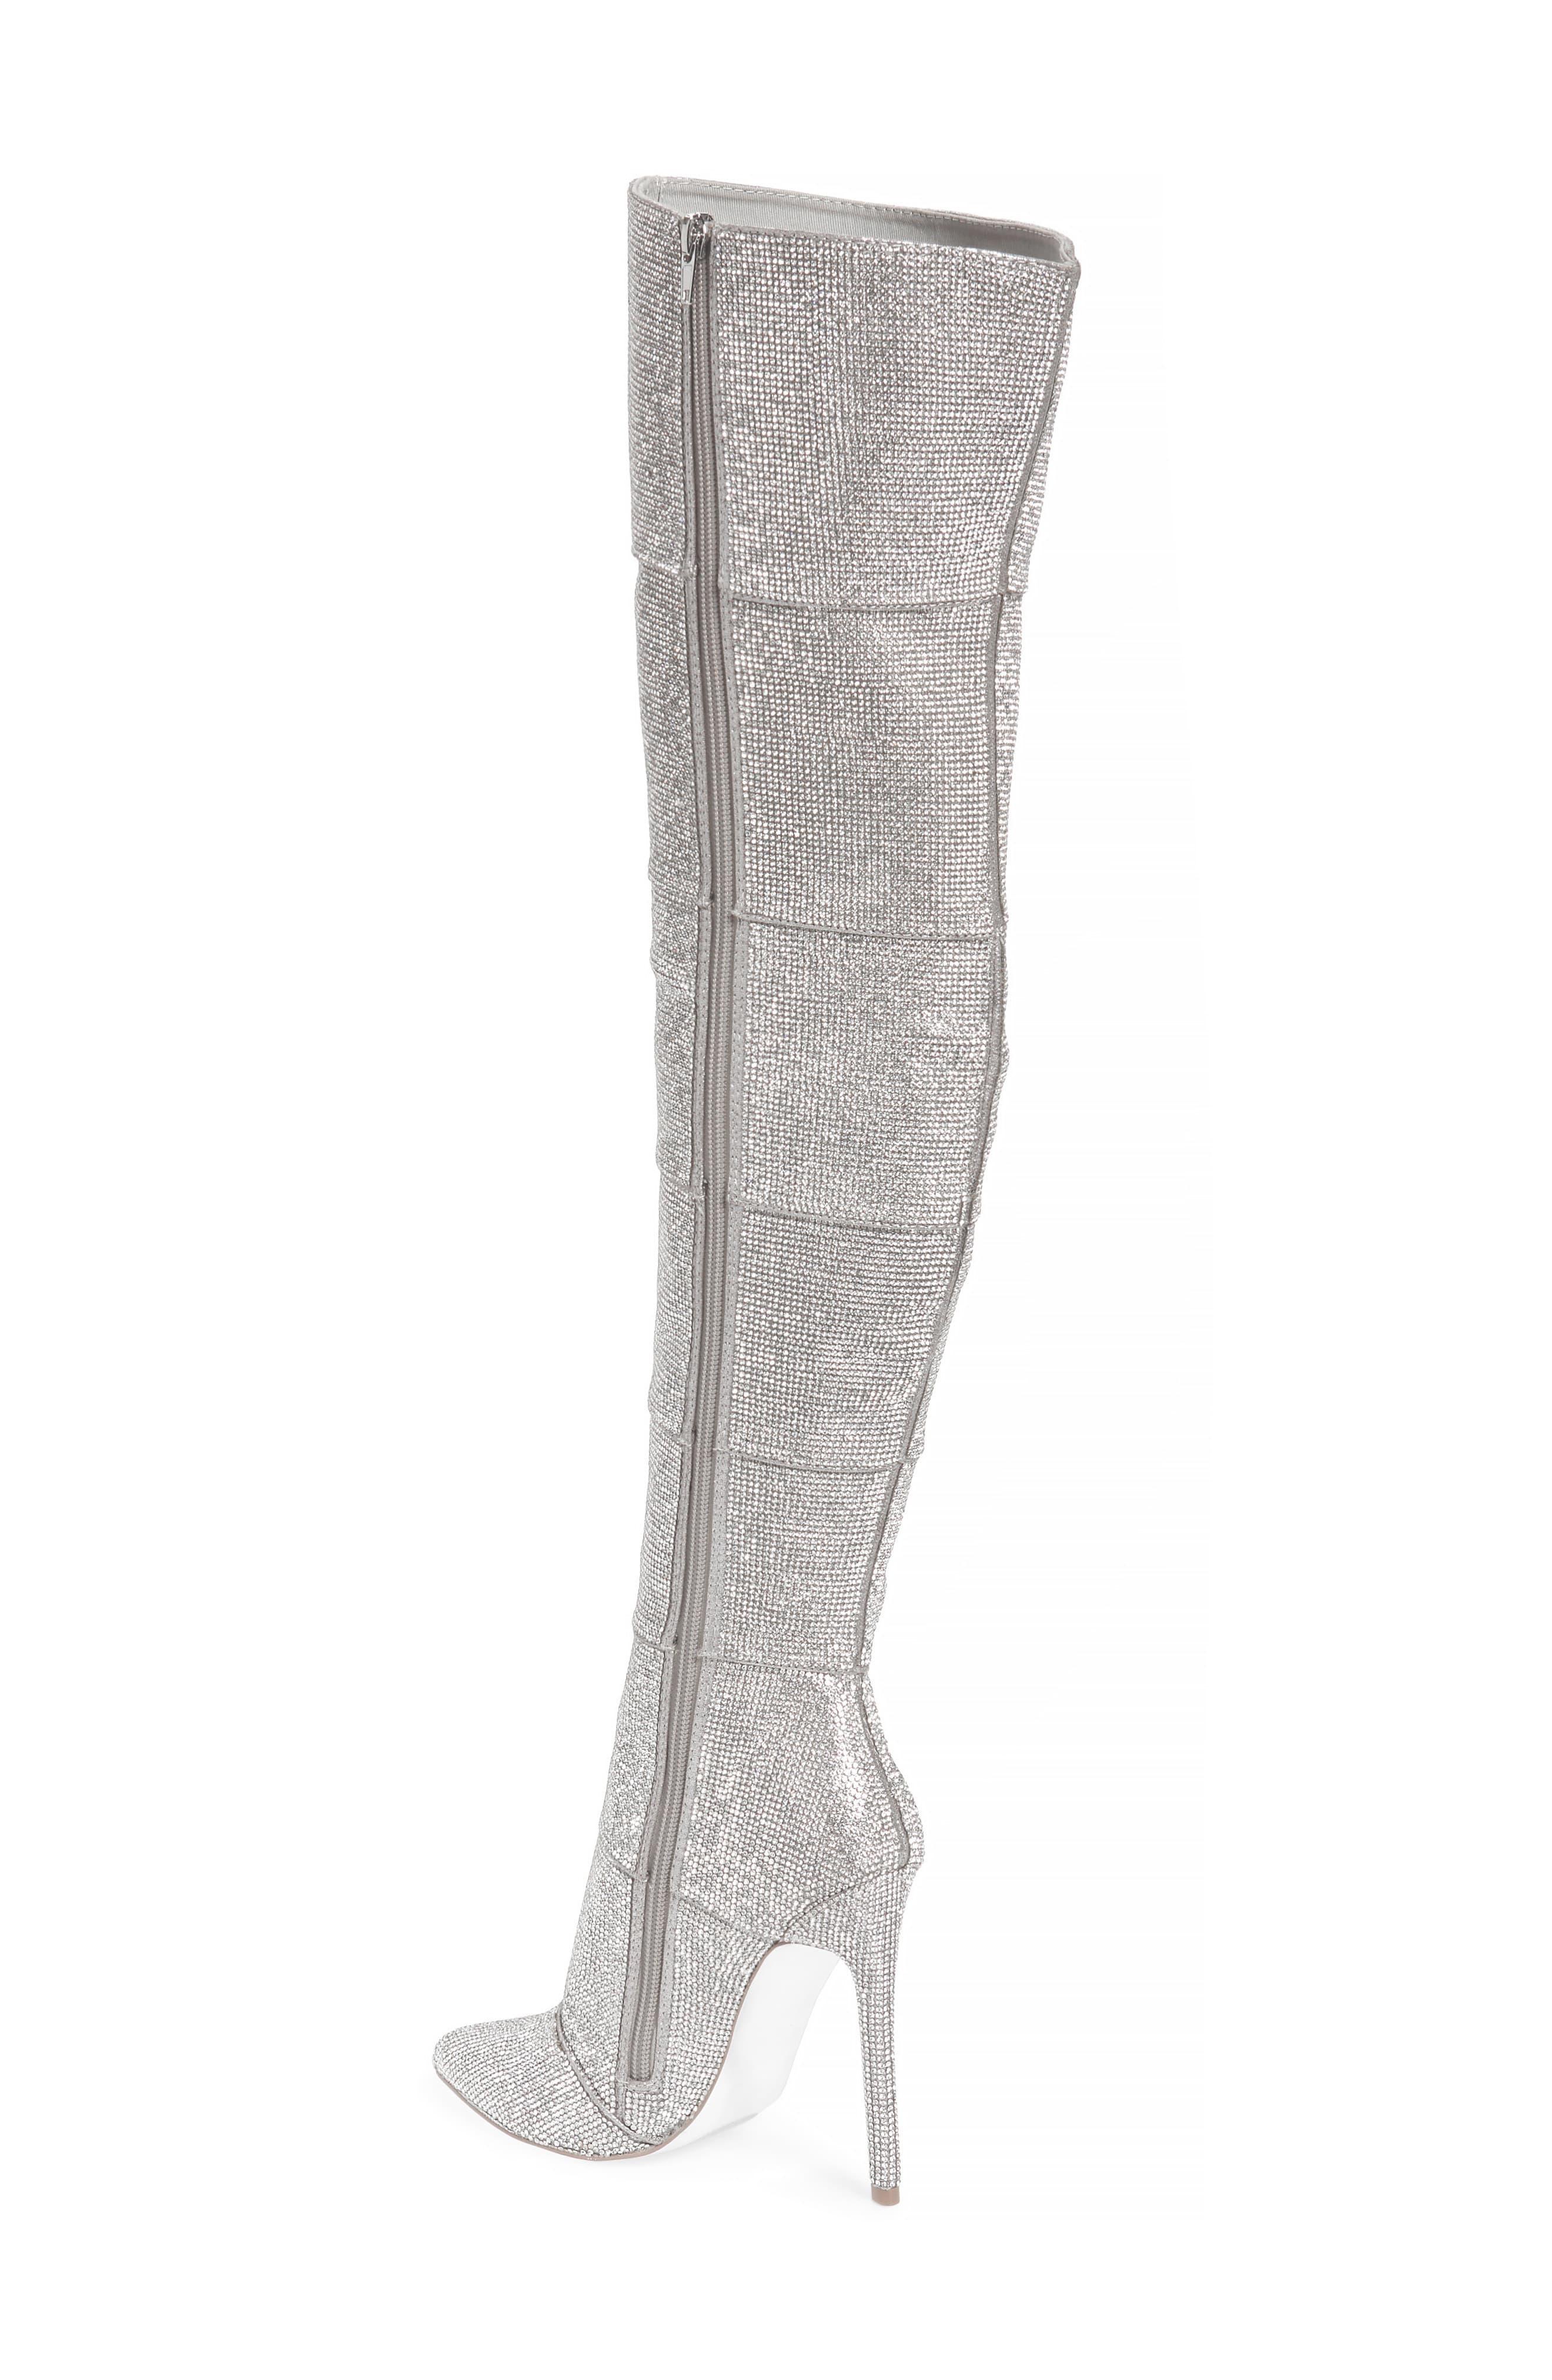 Steve Madden Wonder Crystal Embellished Over The Knee Boot in Gray | Lyst